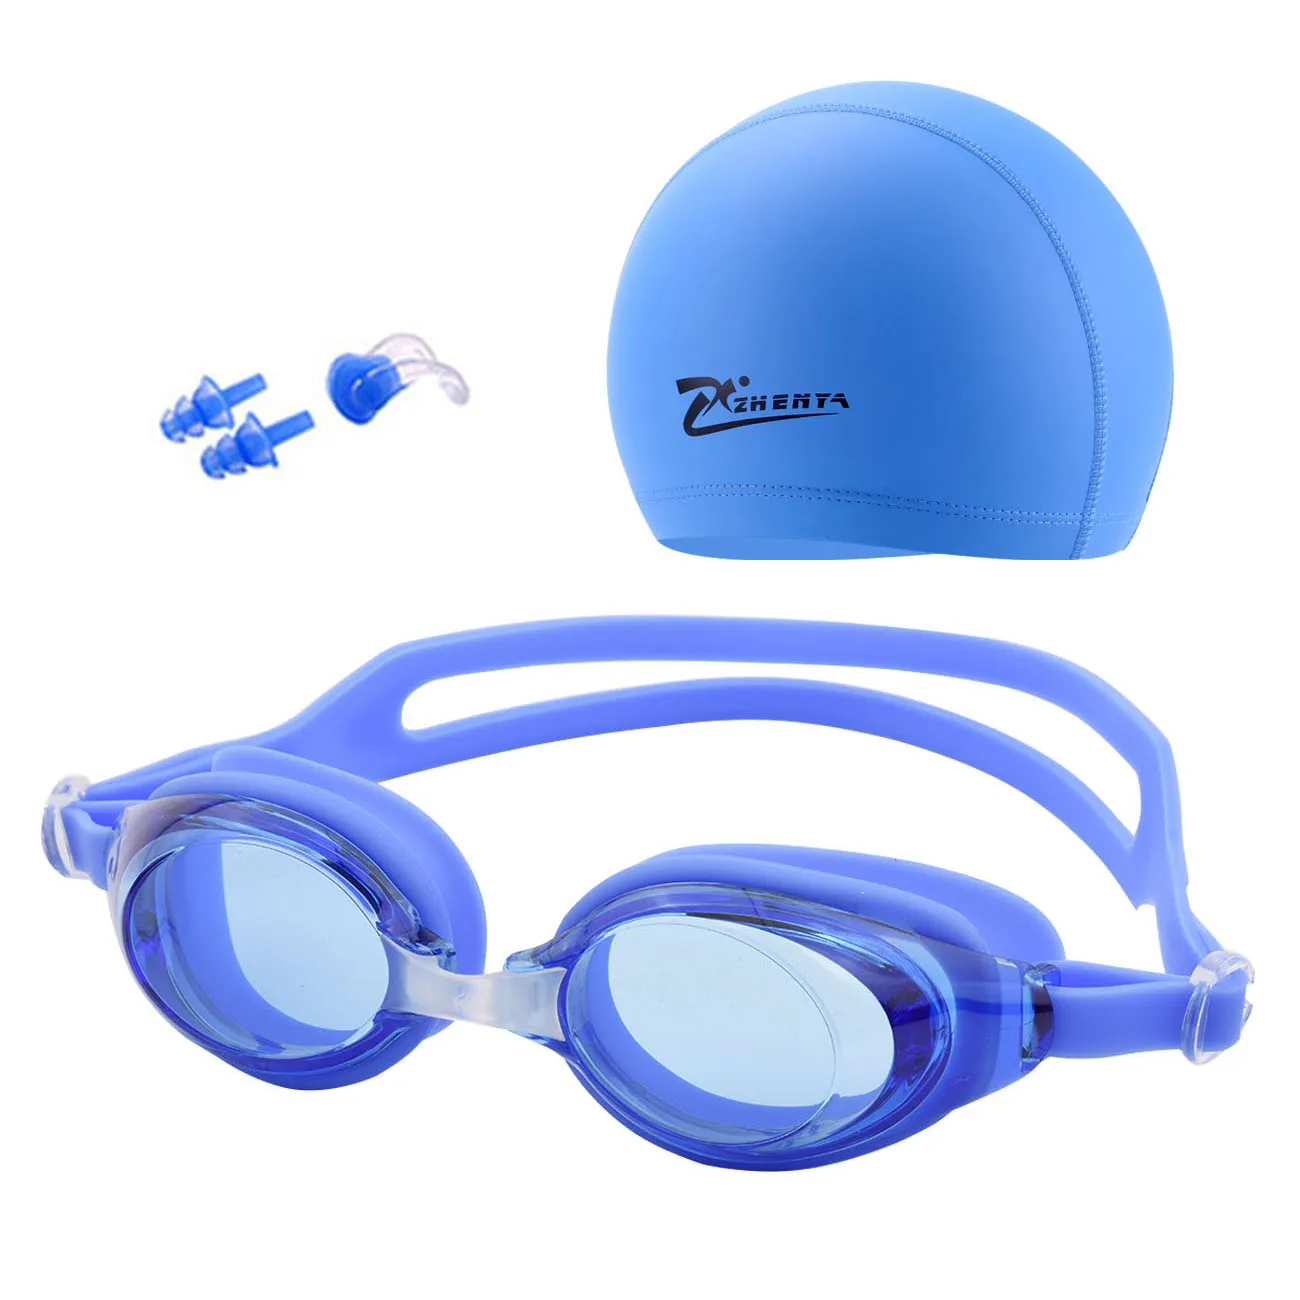 Swim Cap Swimming Glasses Anti-fog Waterproof Swim Goggles Earplug Pool Equipment for Men Women Kids Adult Sports Diving Eyewear